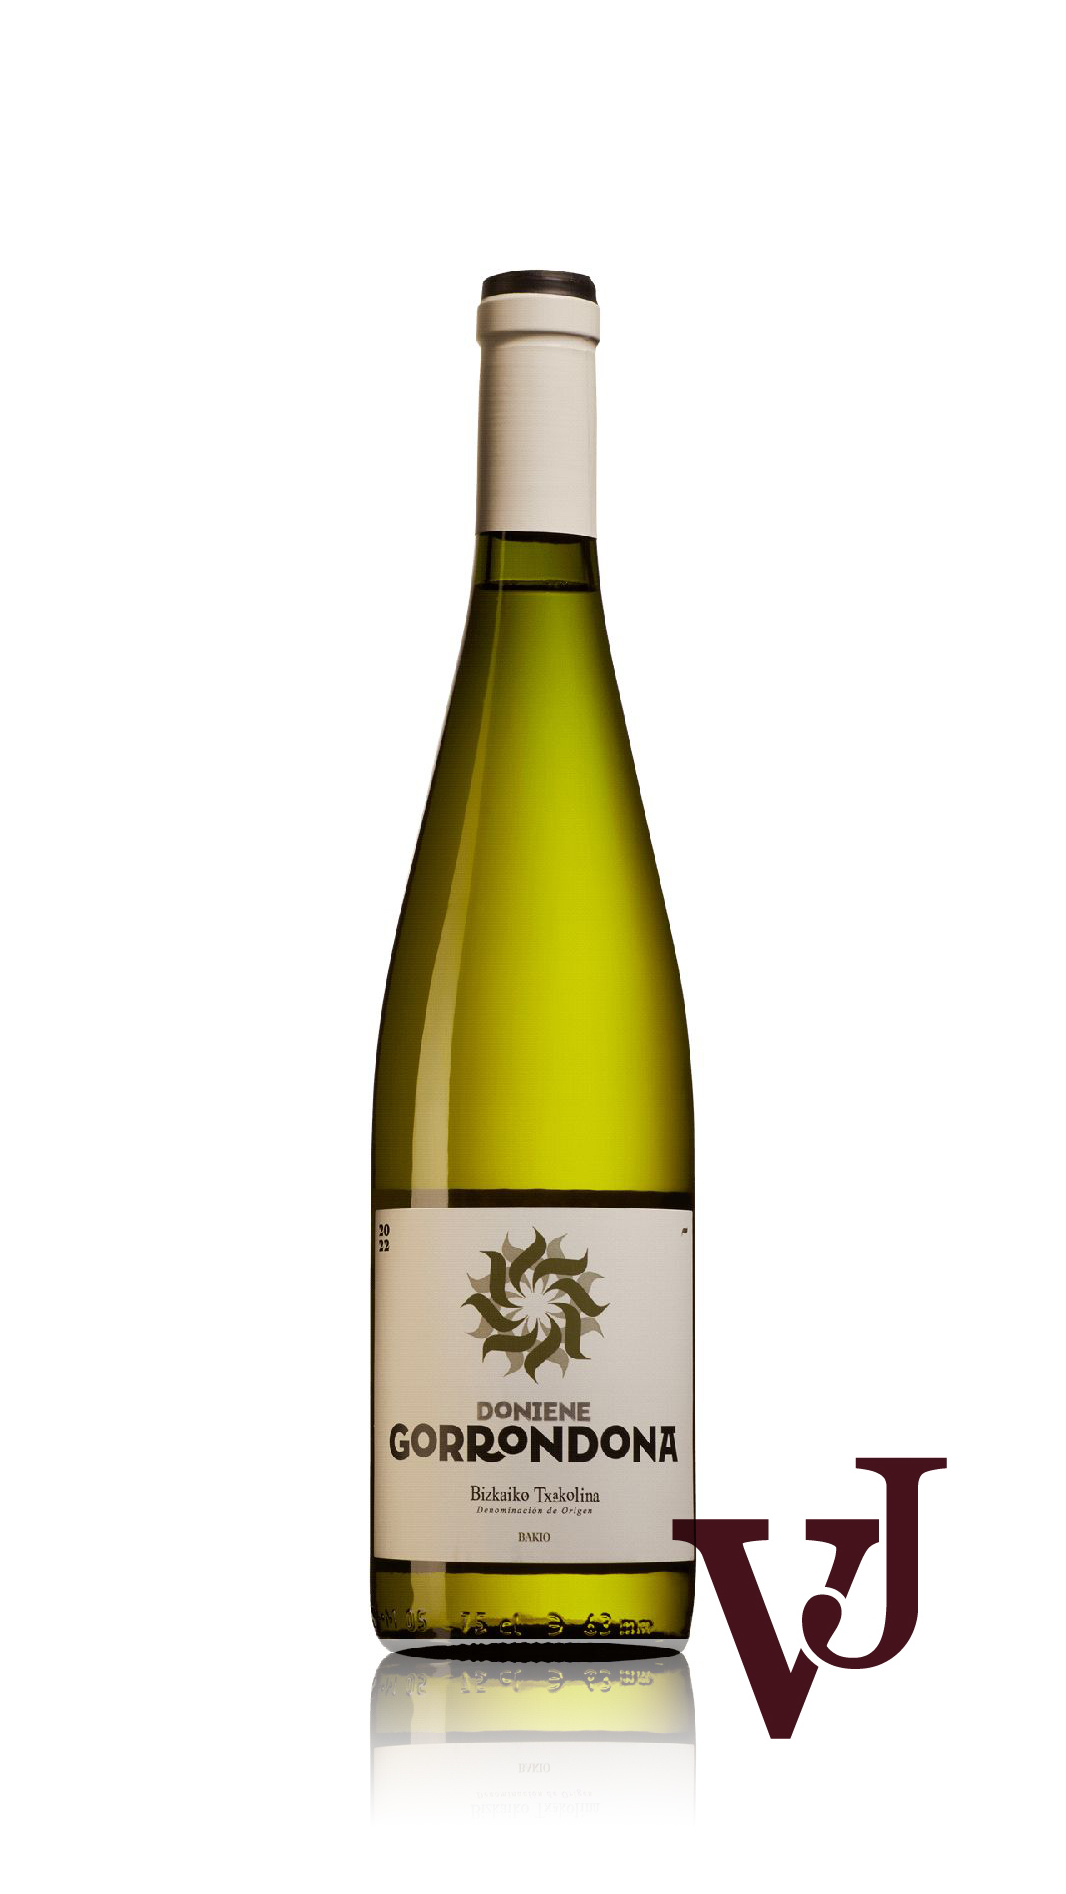 Vitt Vin - Doniene Gorrondona 2022 artikel nummer 9392701 från producenten Doniene Gorrondona från området Spanien